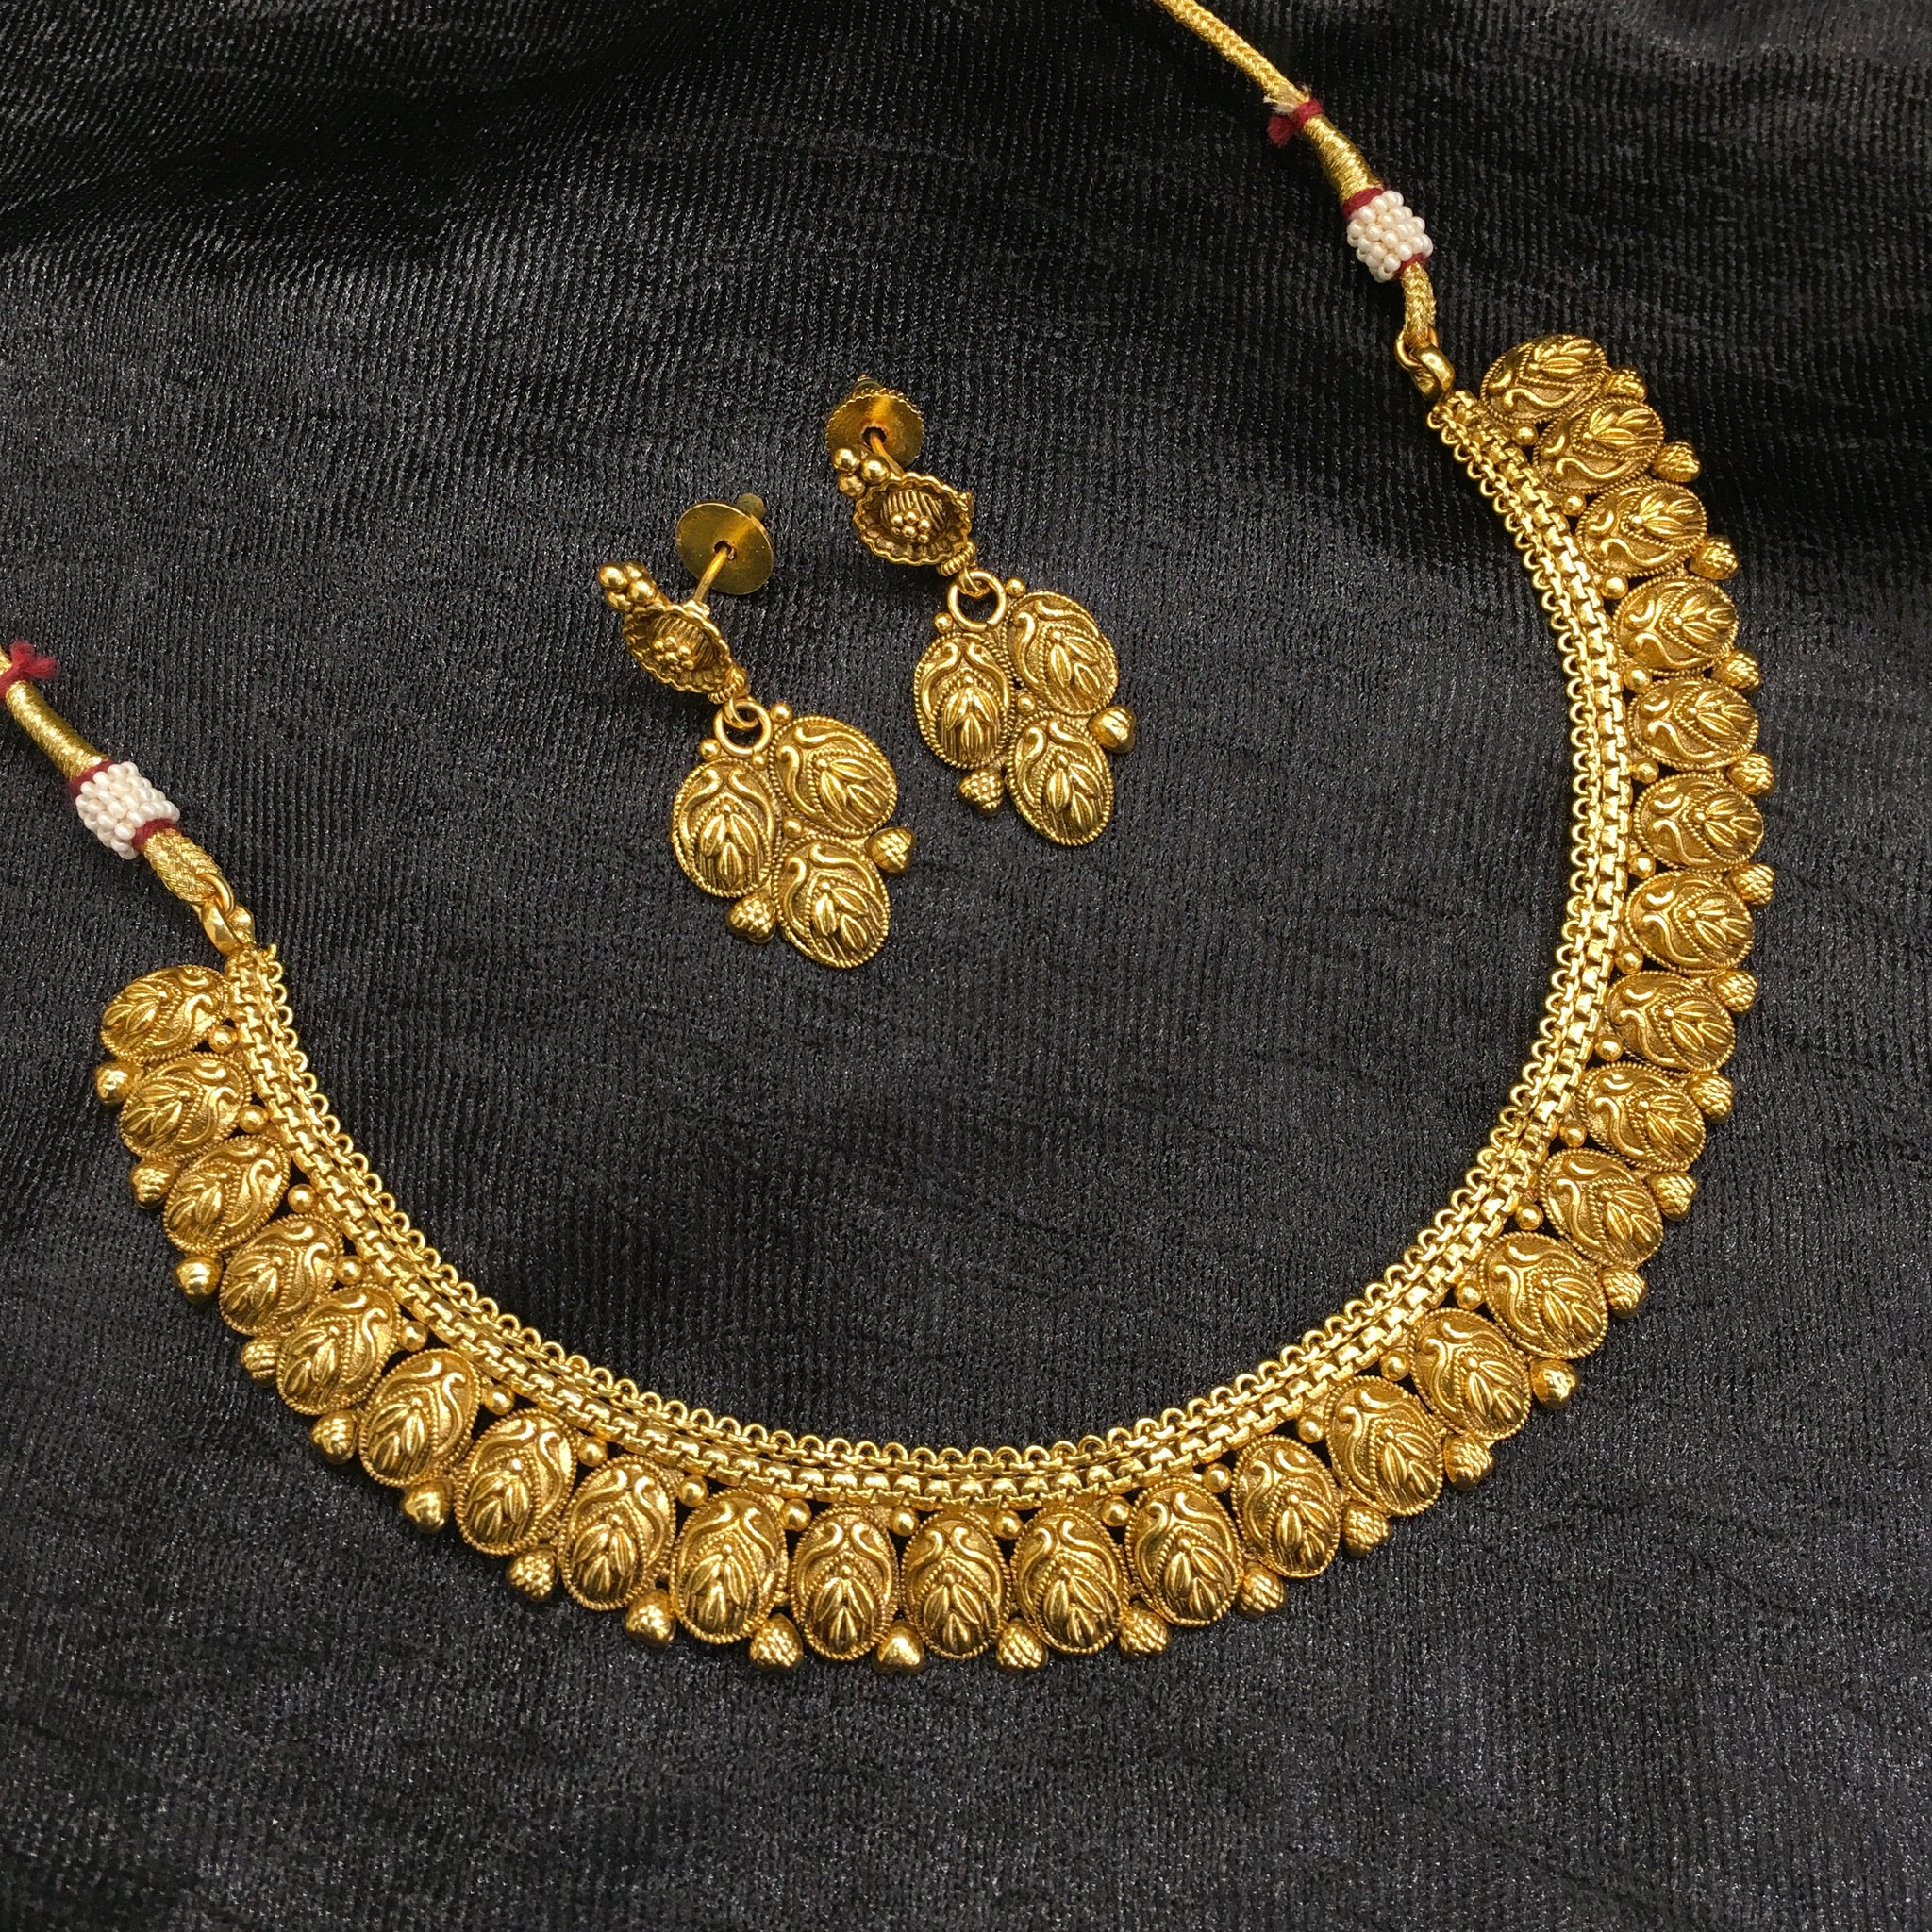 Round Neck Gold Look Necklace Set 4657-33 - Dazzles Jewellery